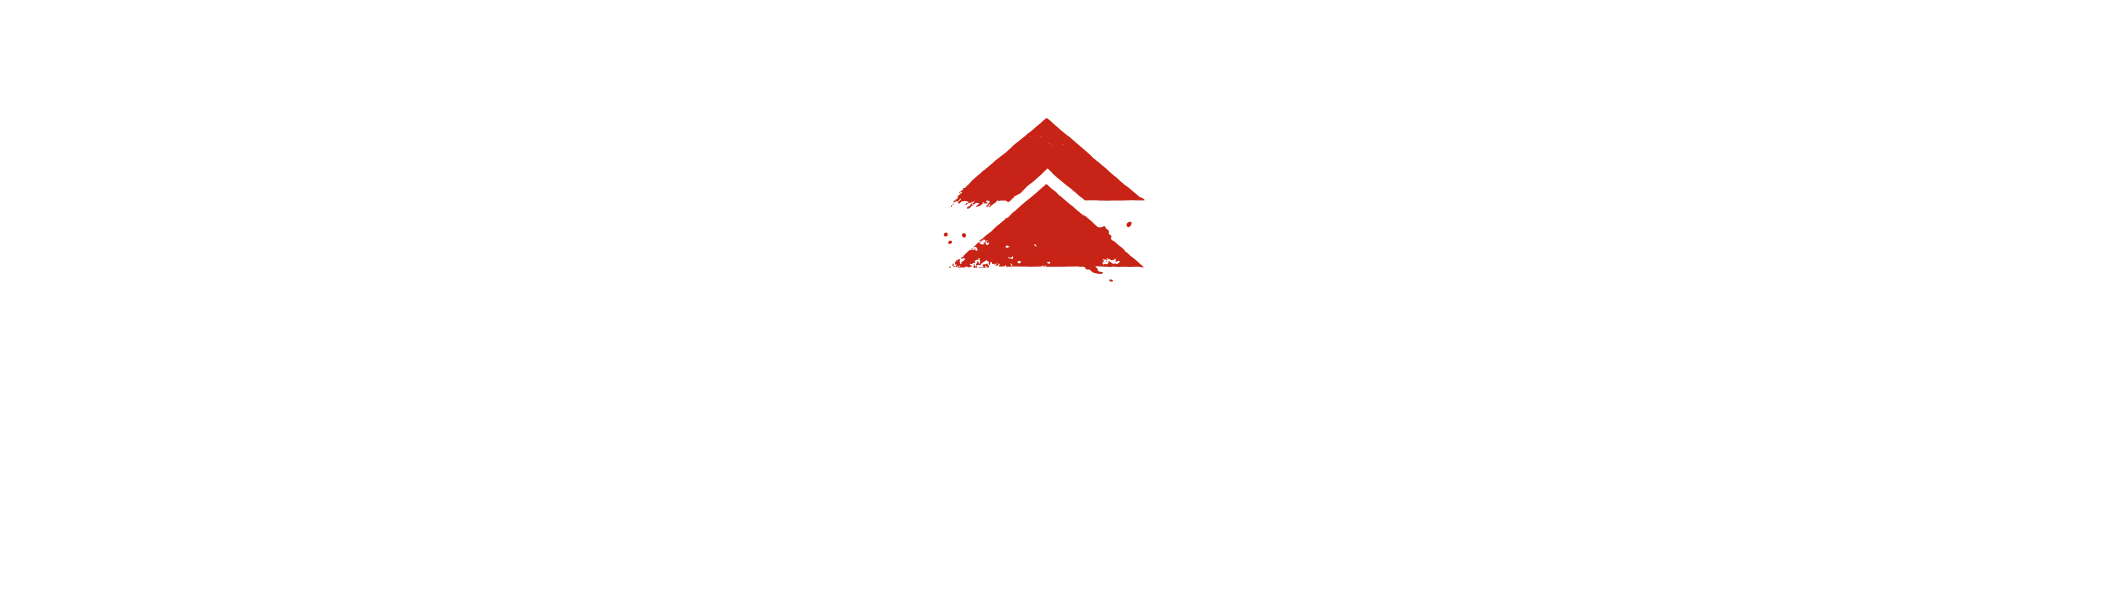 Legend, Ghost of Tsushima Wiki